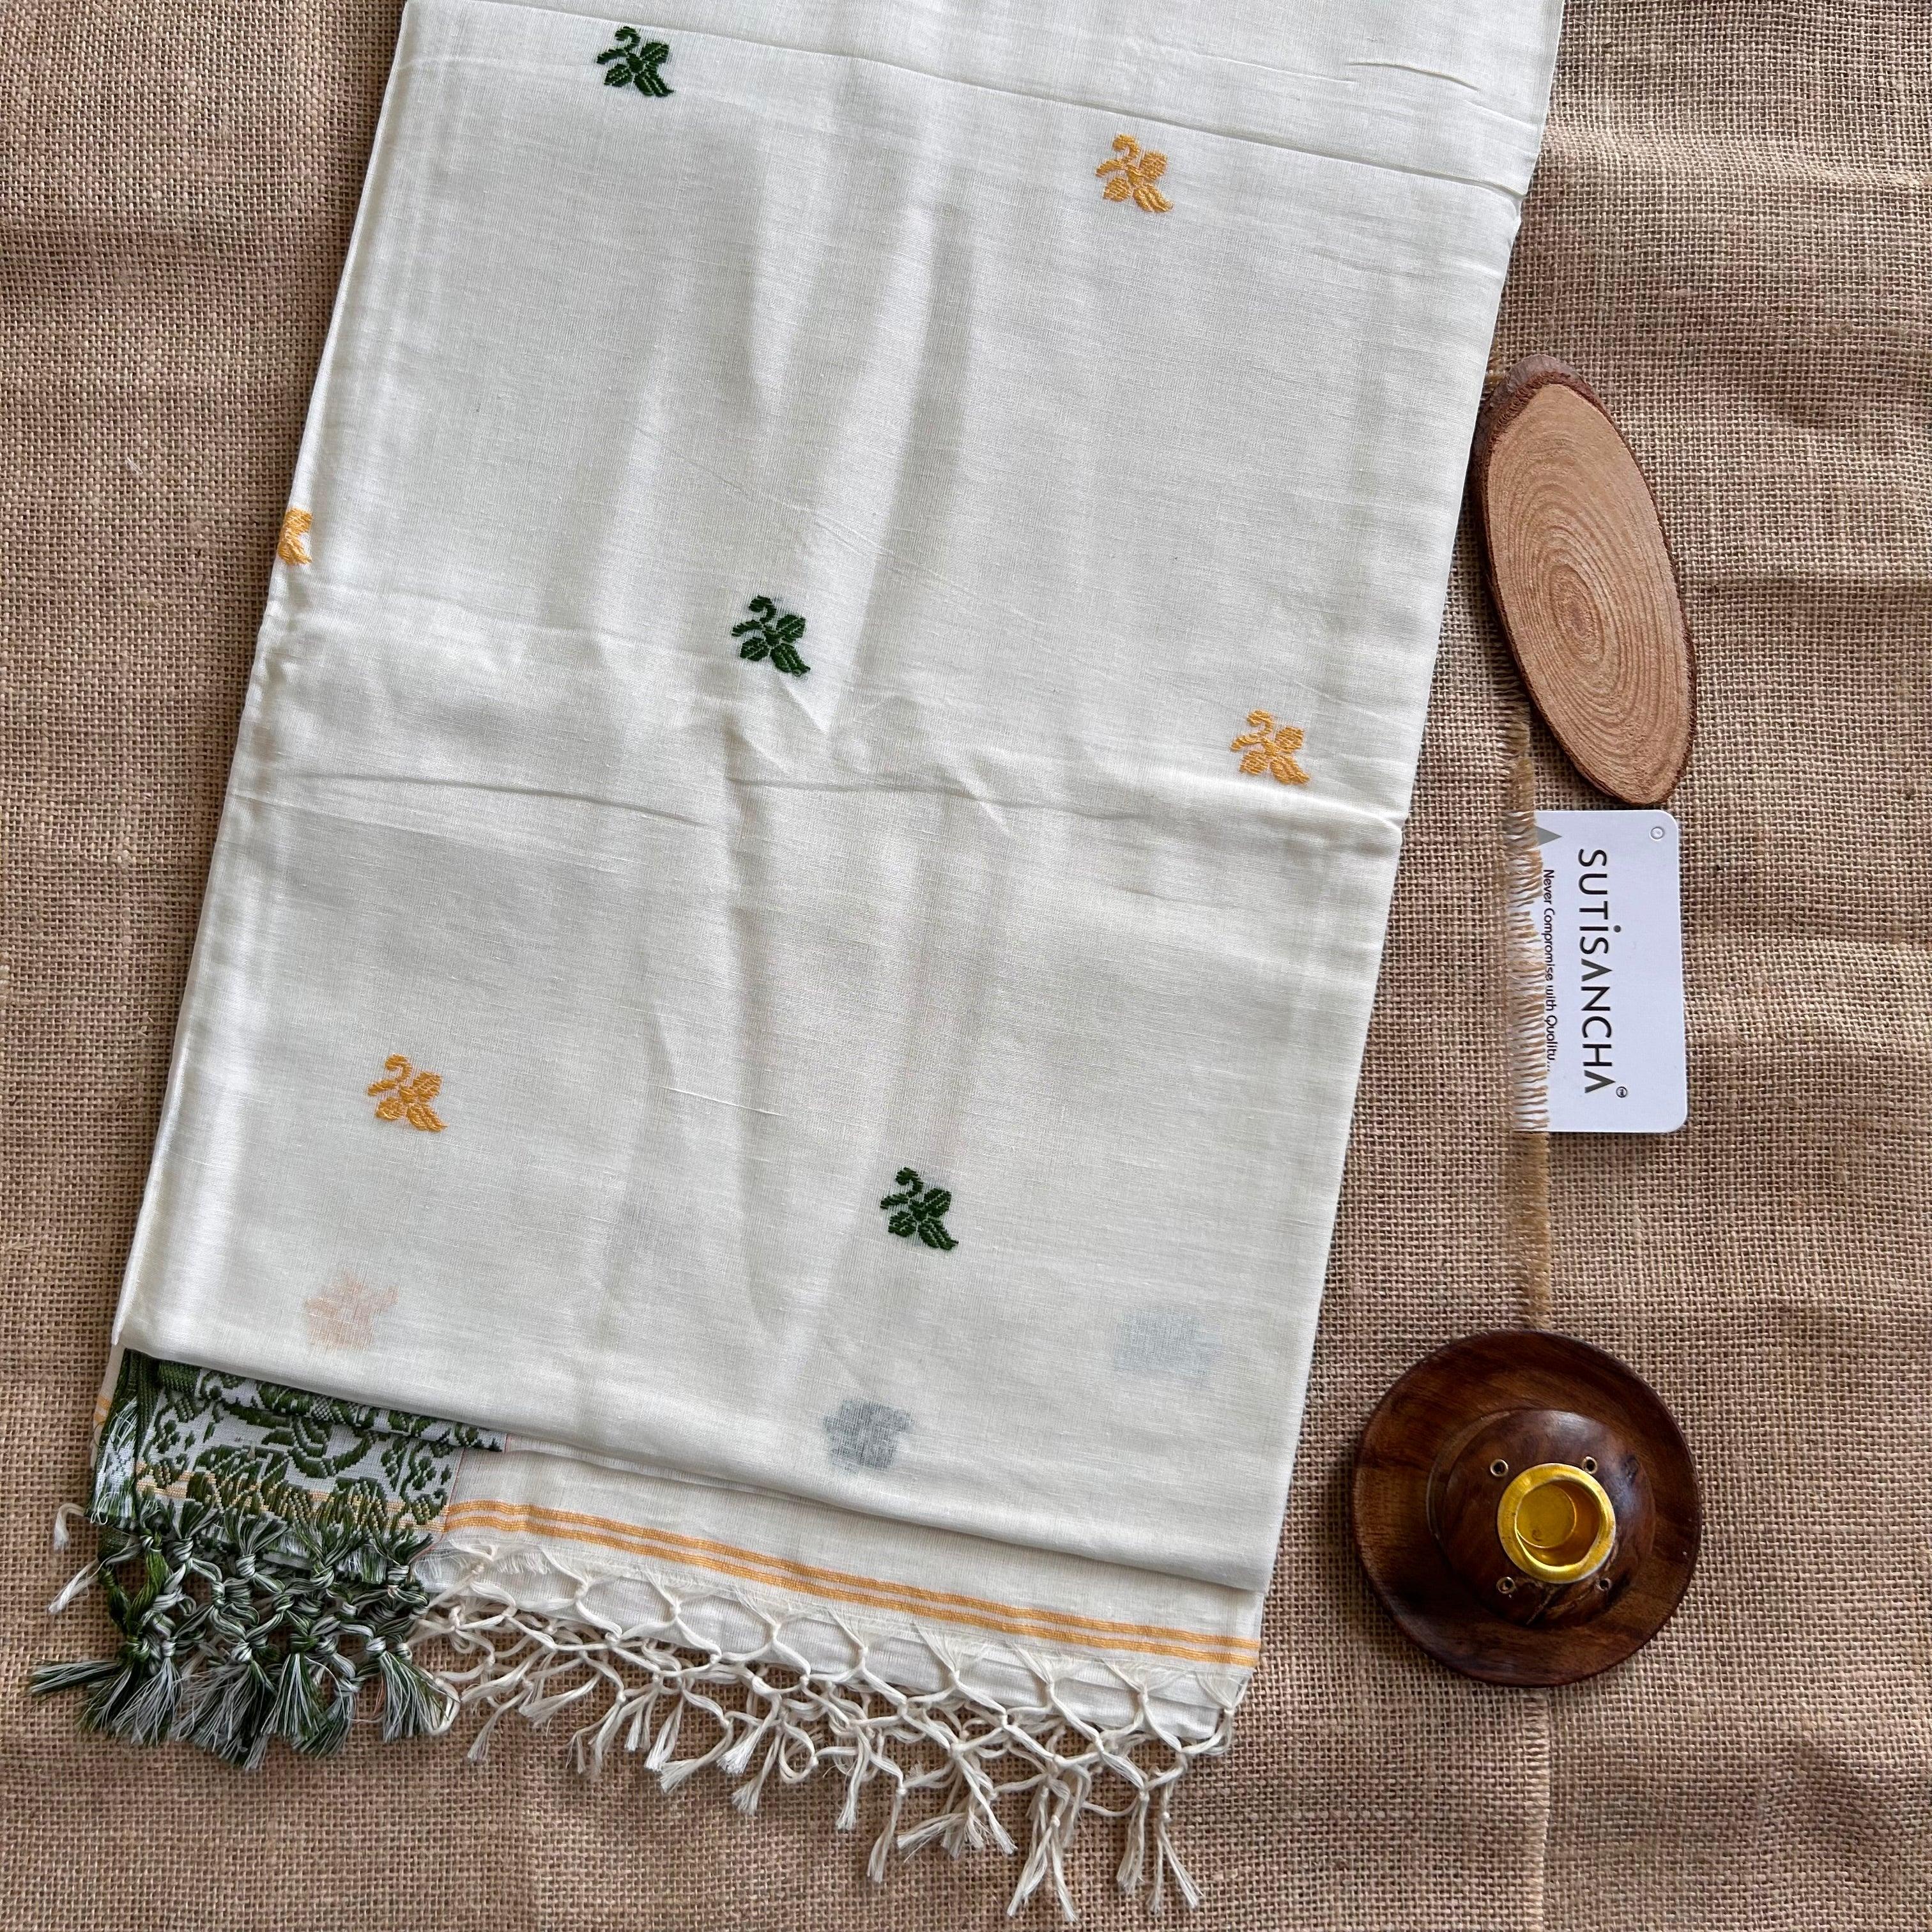 Sutisancha Handloom Cotton Offwhite jamdani saree - Suti Sancha